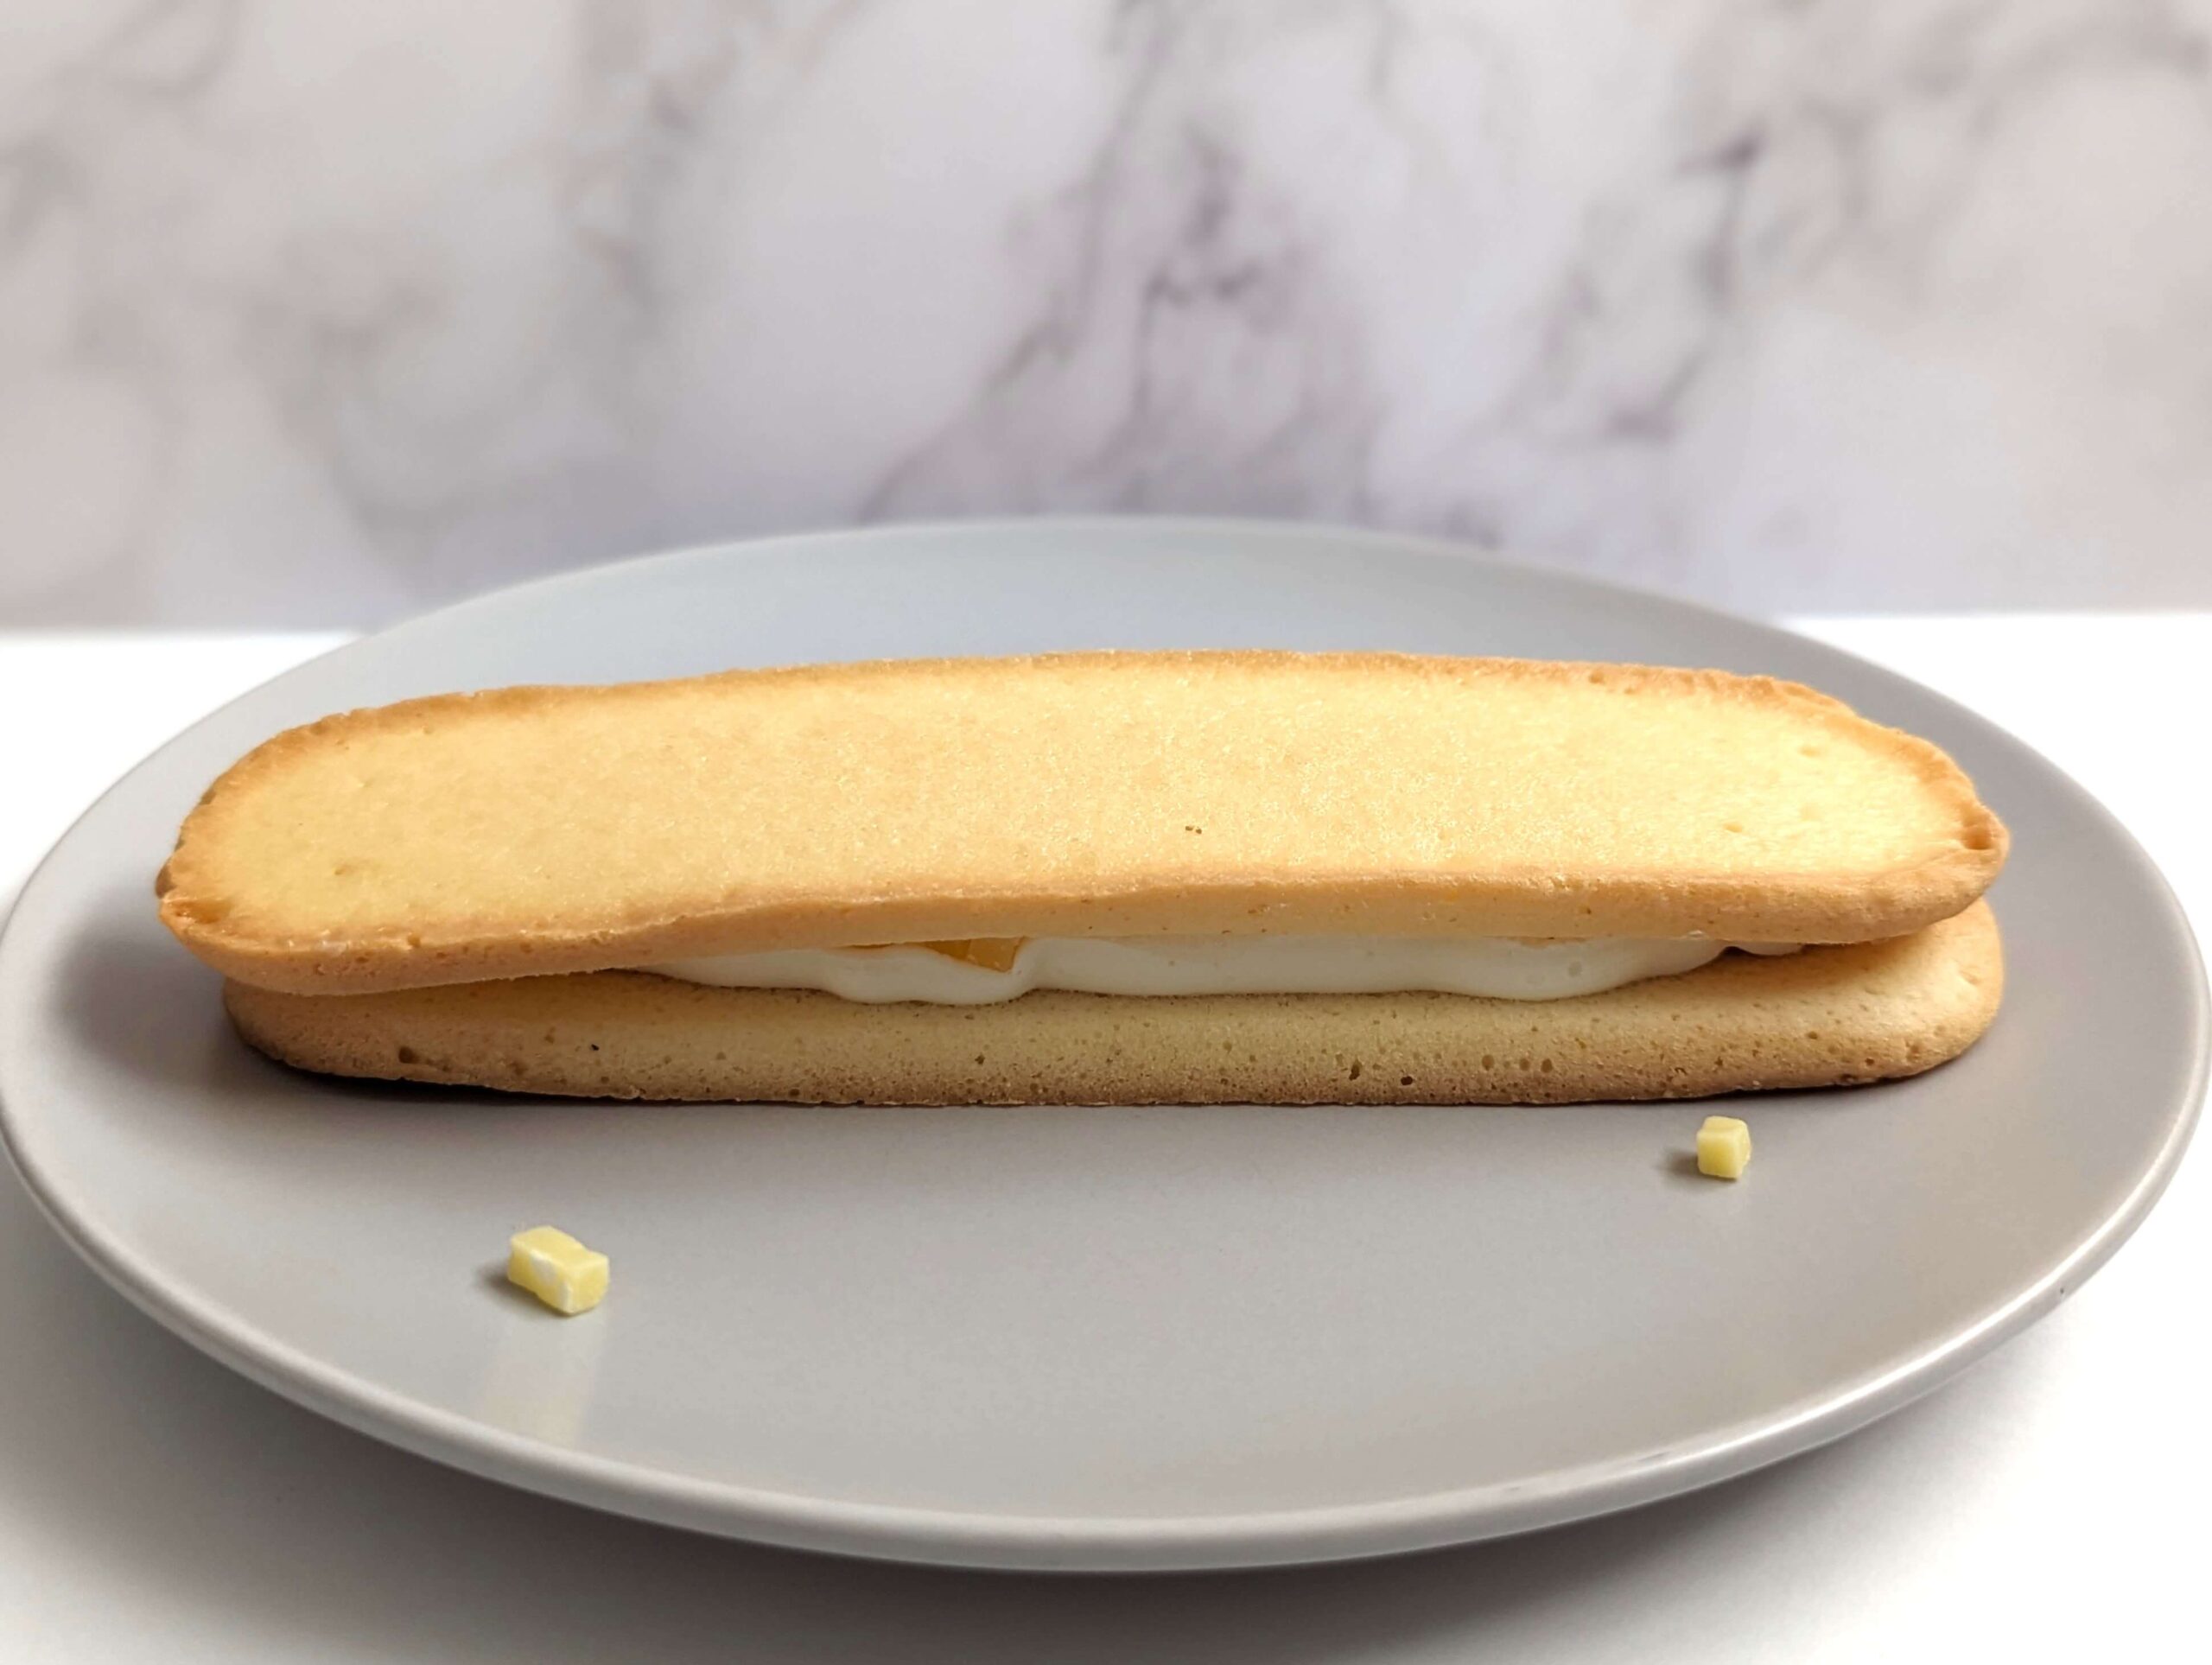 Yamazaki（山崎製パン）の「チーズサンド」の写真